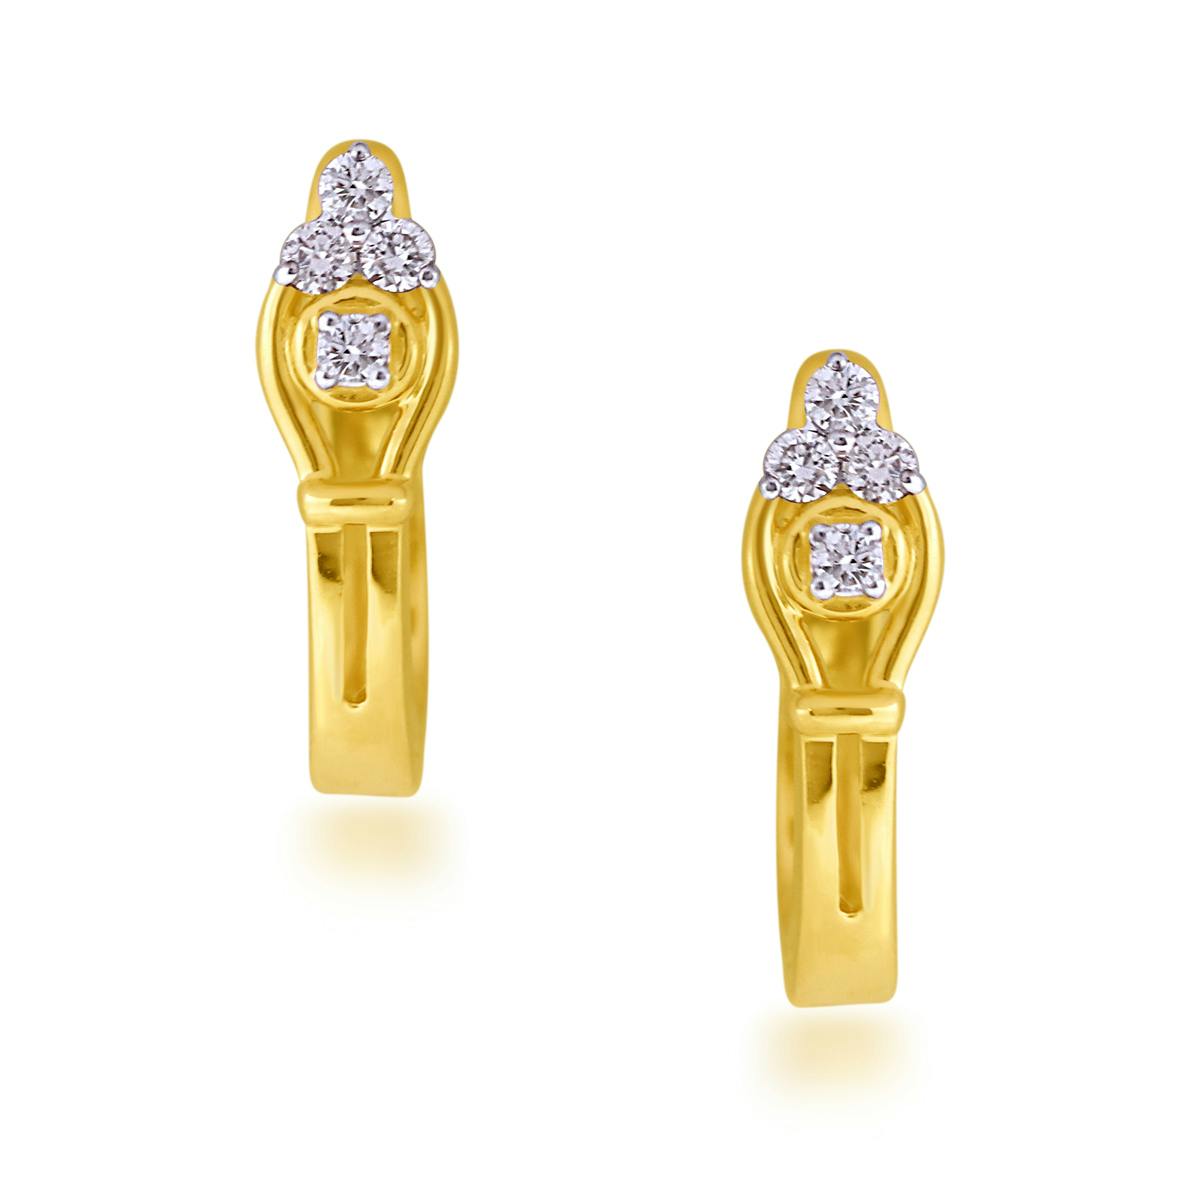 Cora bali earrings